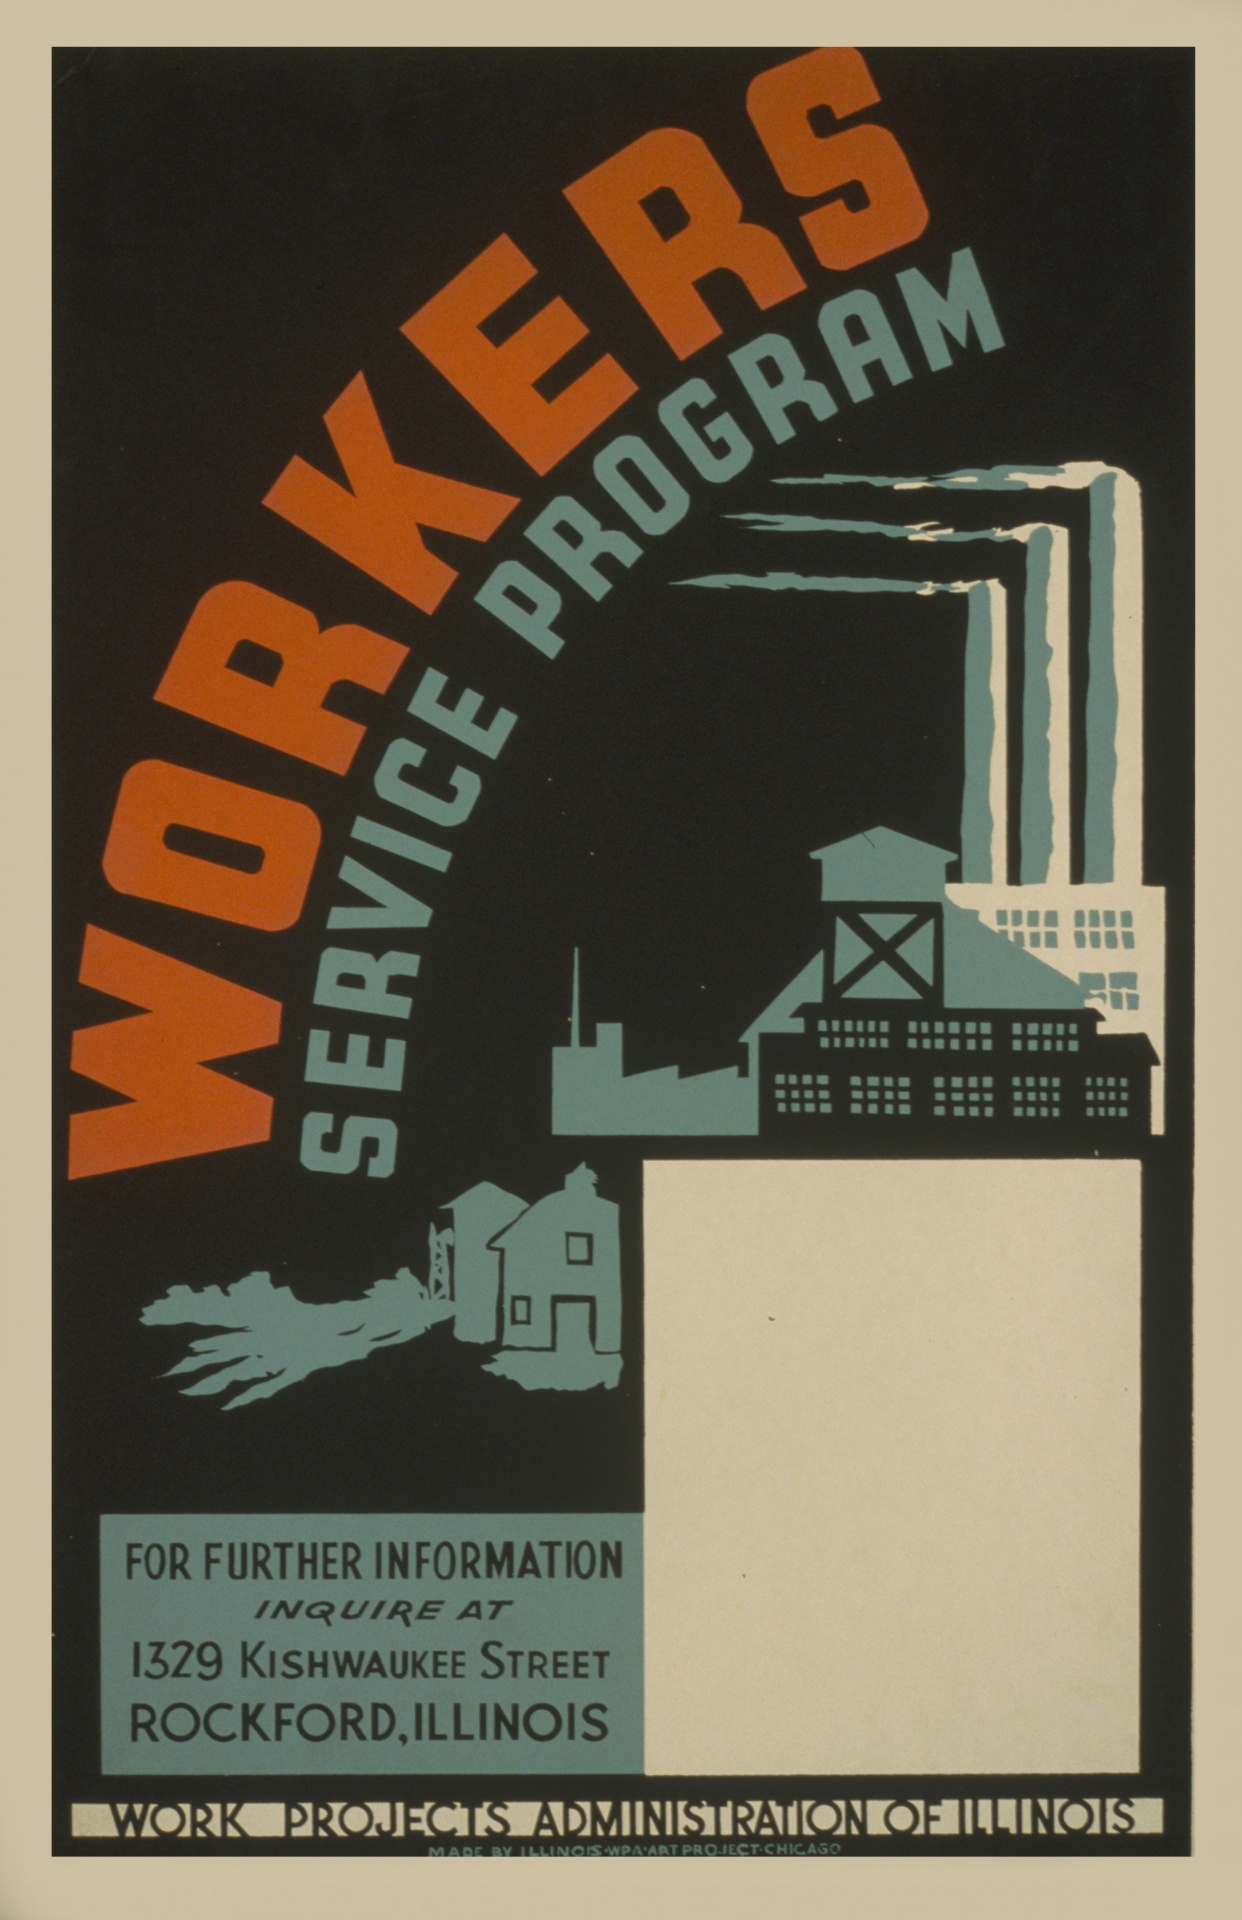 Trabalhadores do vintage Poster